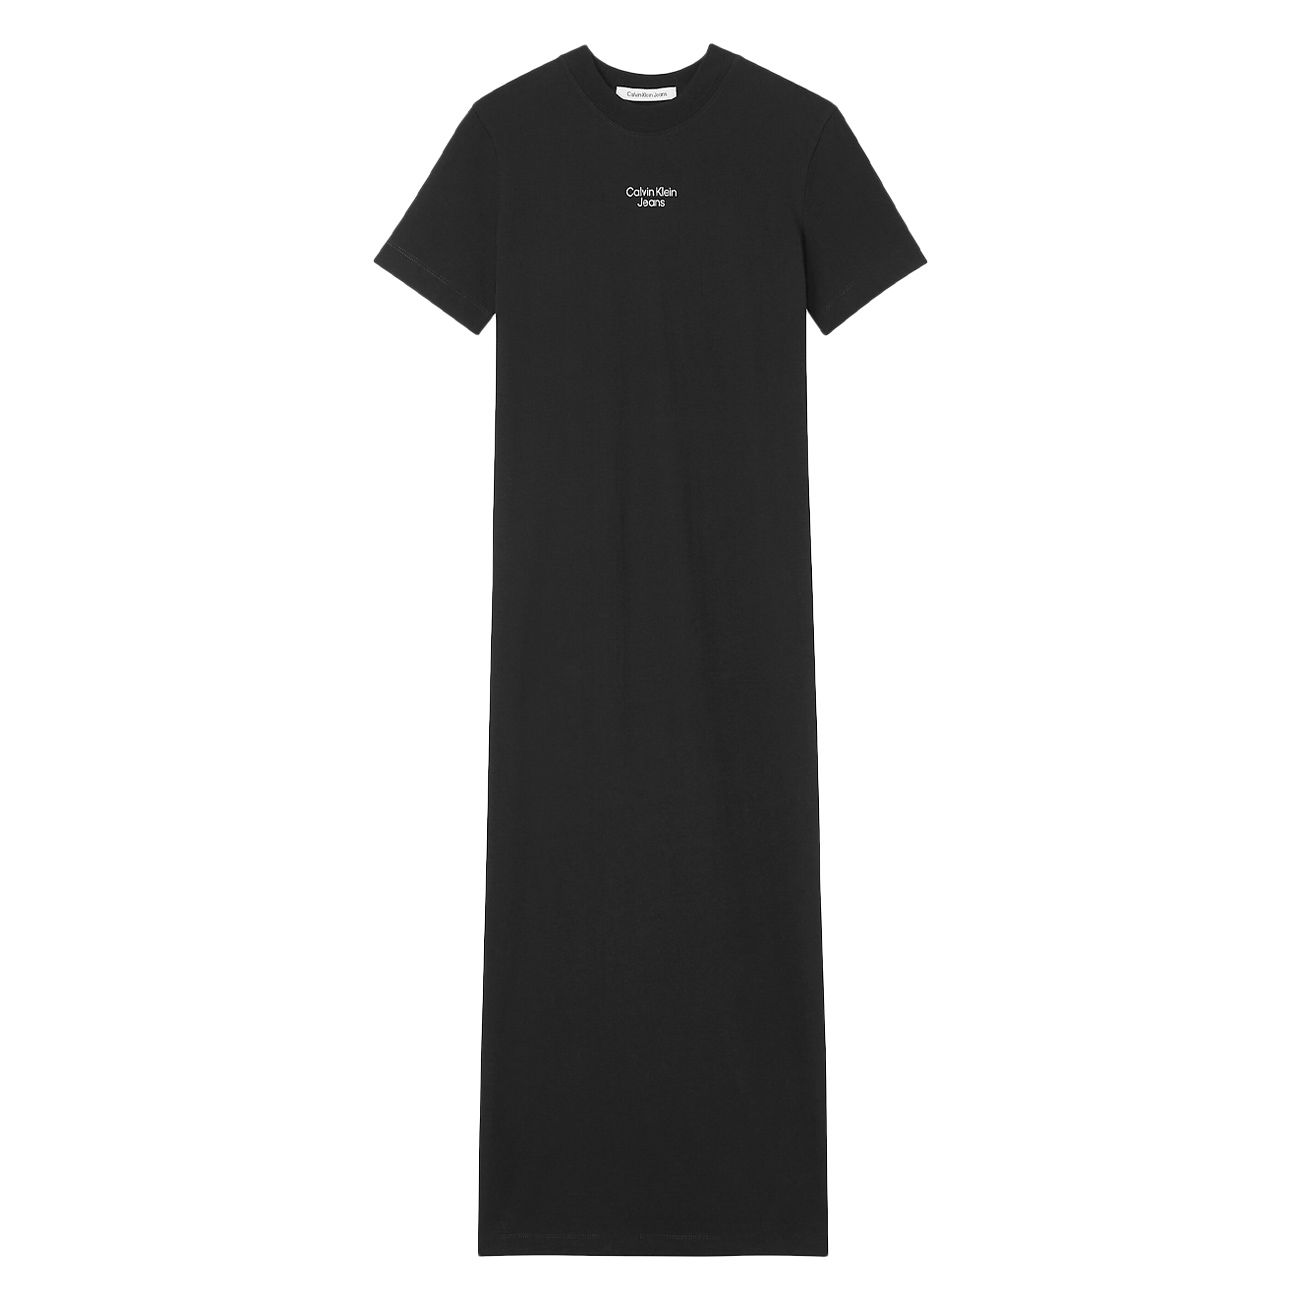 KLEIN Woman CALVIN T-SHIRT DRESS Store STACKED | Mascheroni JEANS LOGO Black